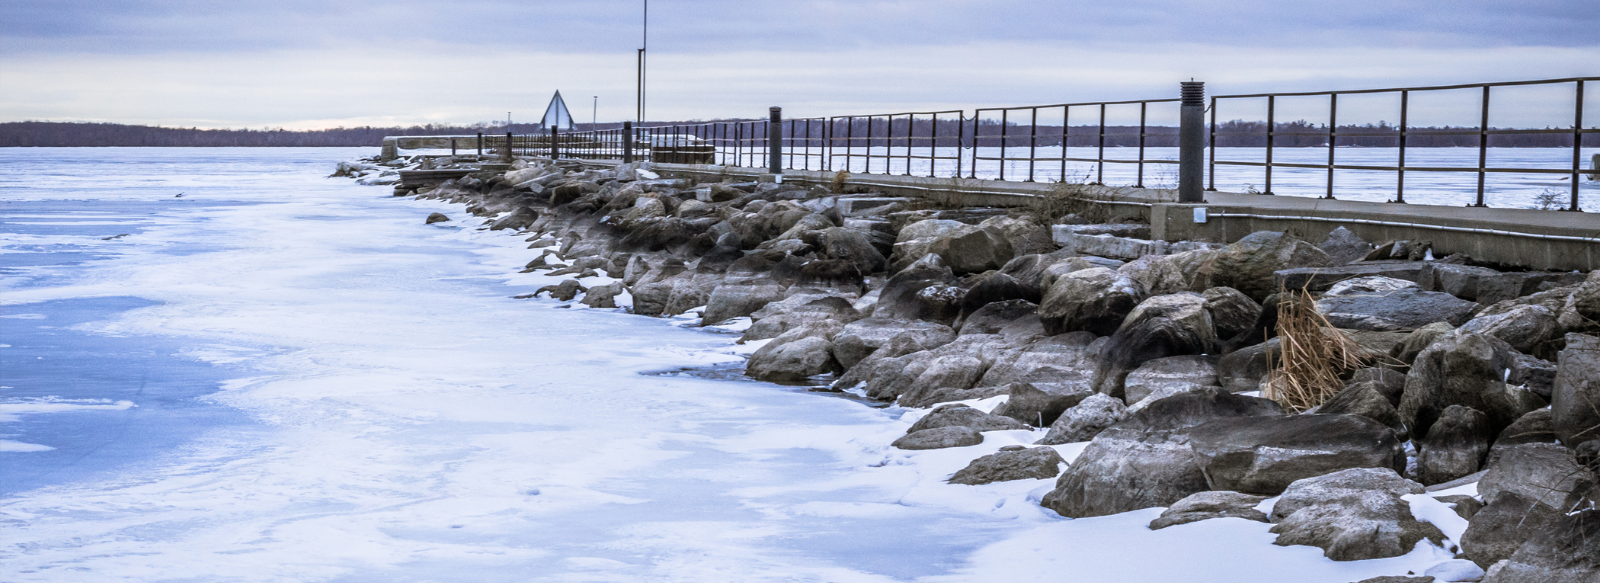 Beaverton Pier frozen over in winter